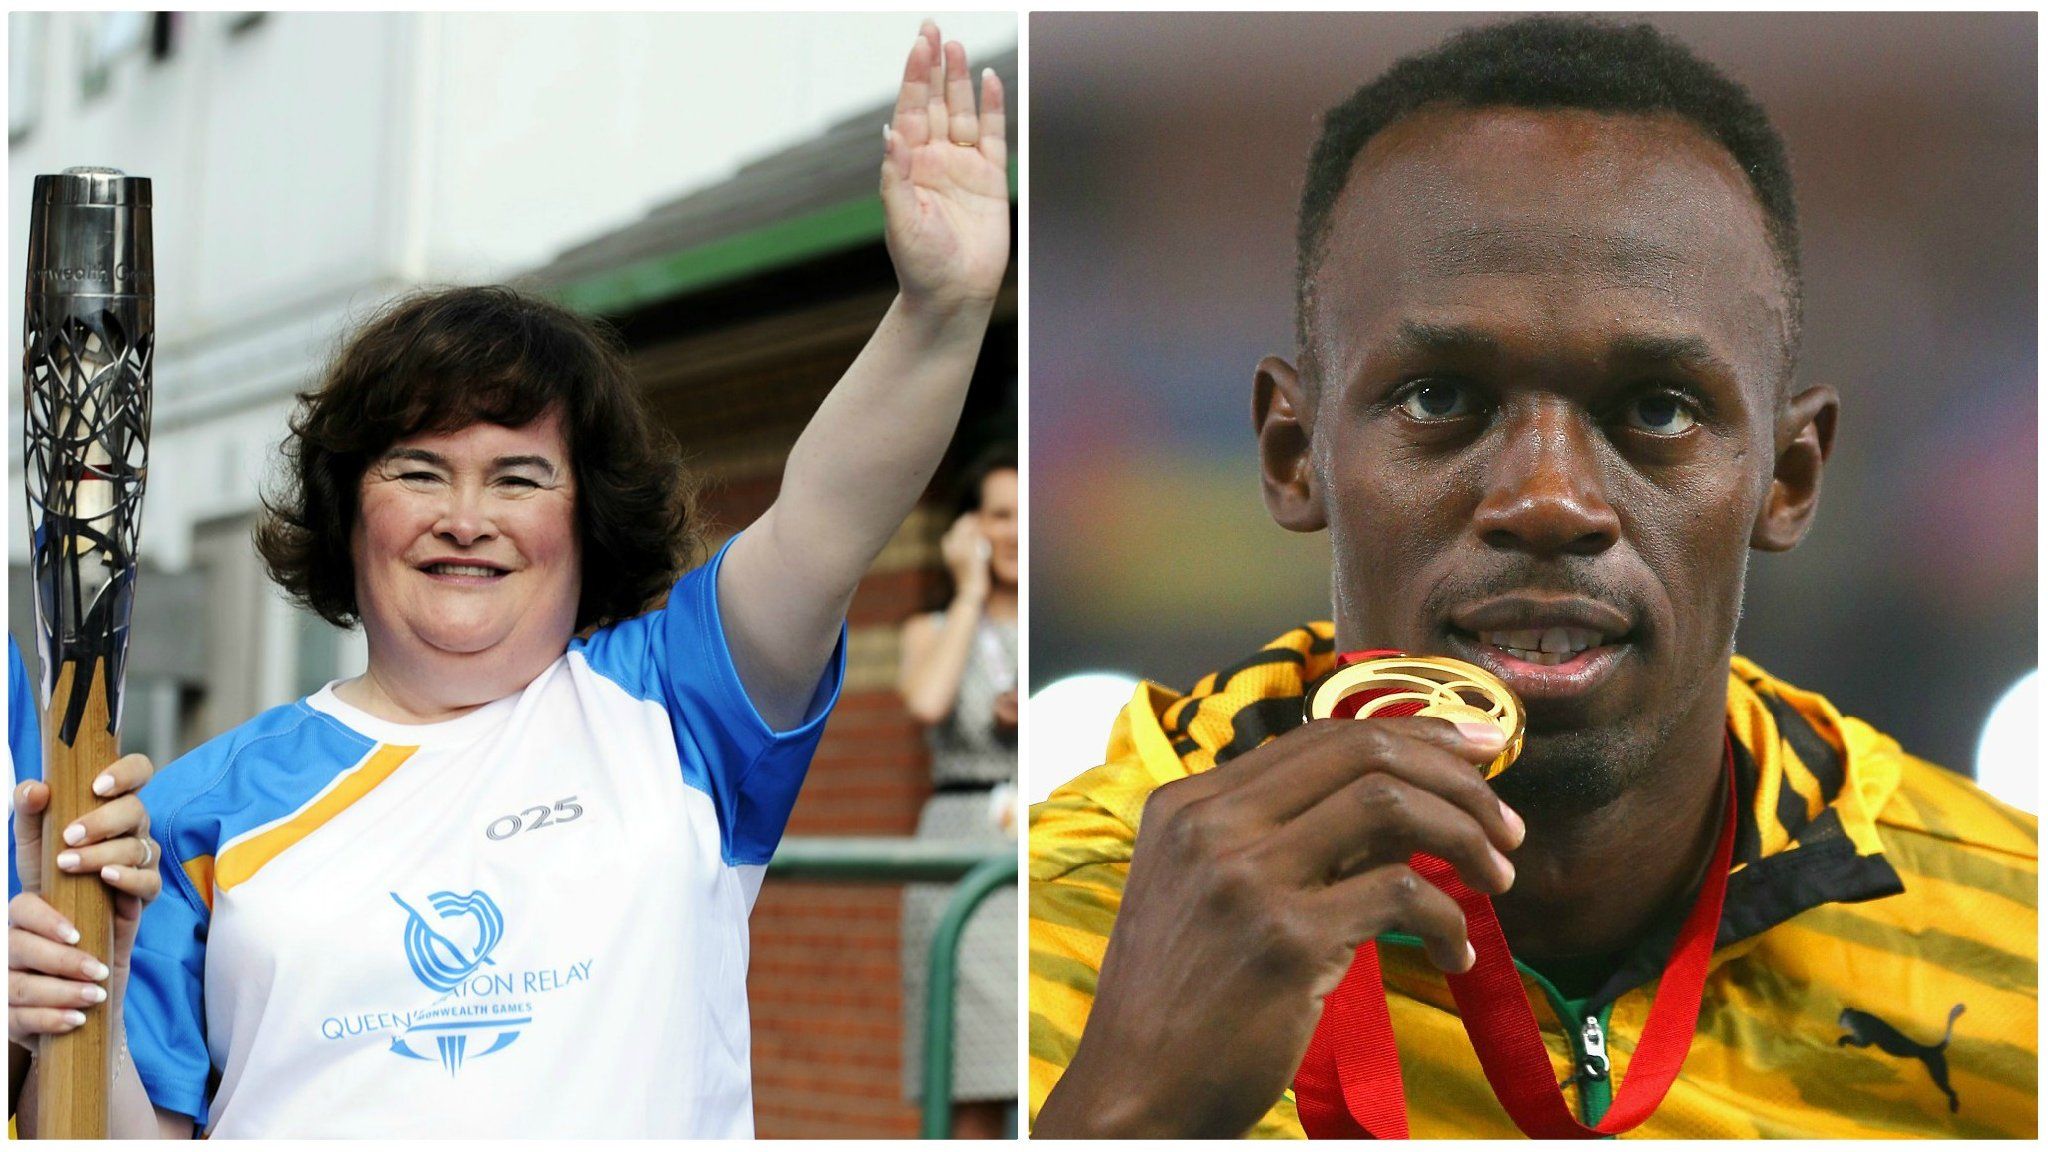 Susan Boyle and Usain Bolt